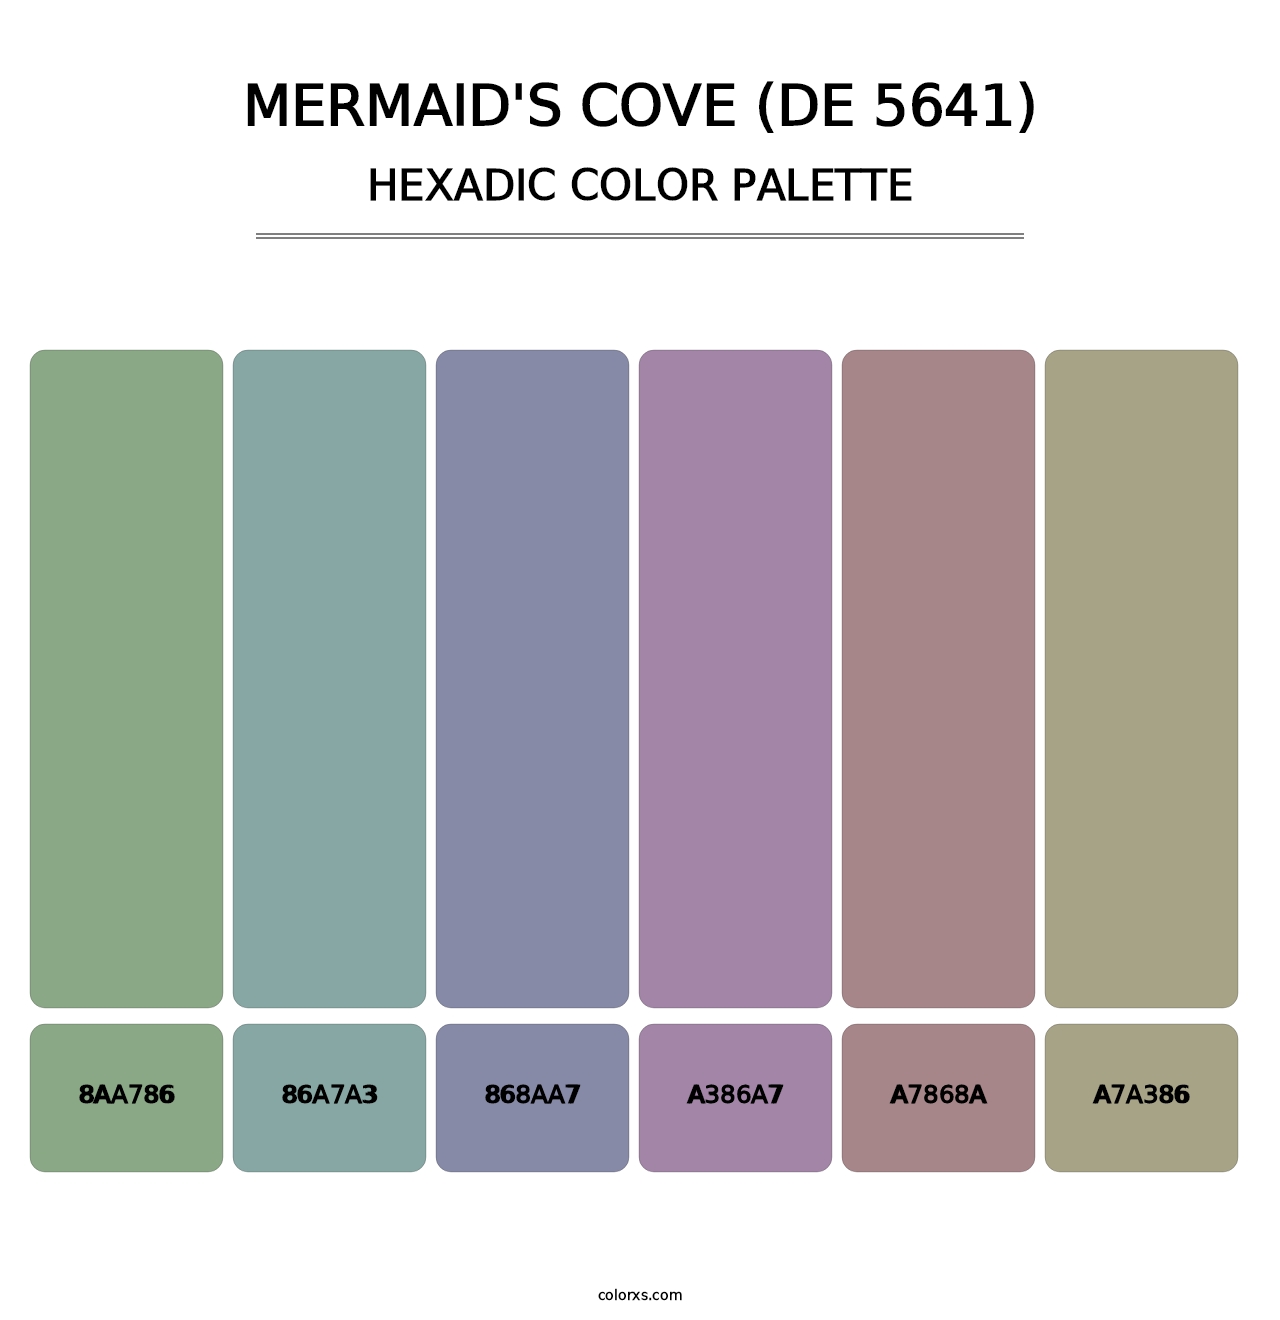 Mermaid's Cove (DE 5641) - Hexadic Color Palette